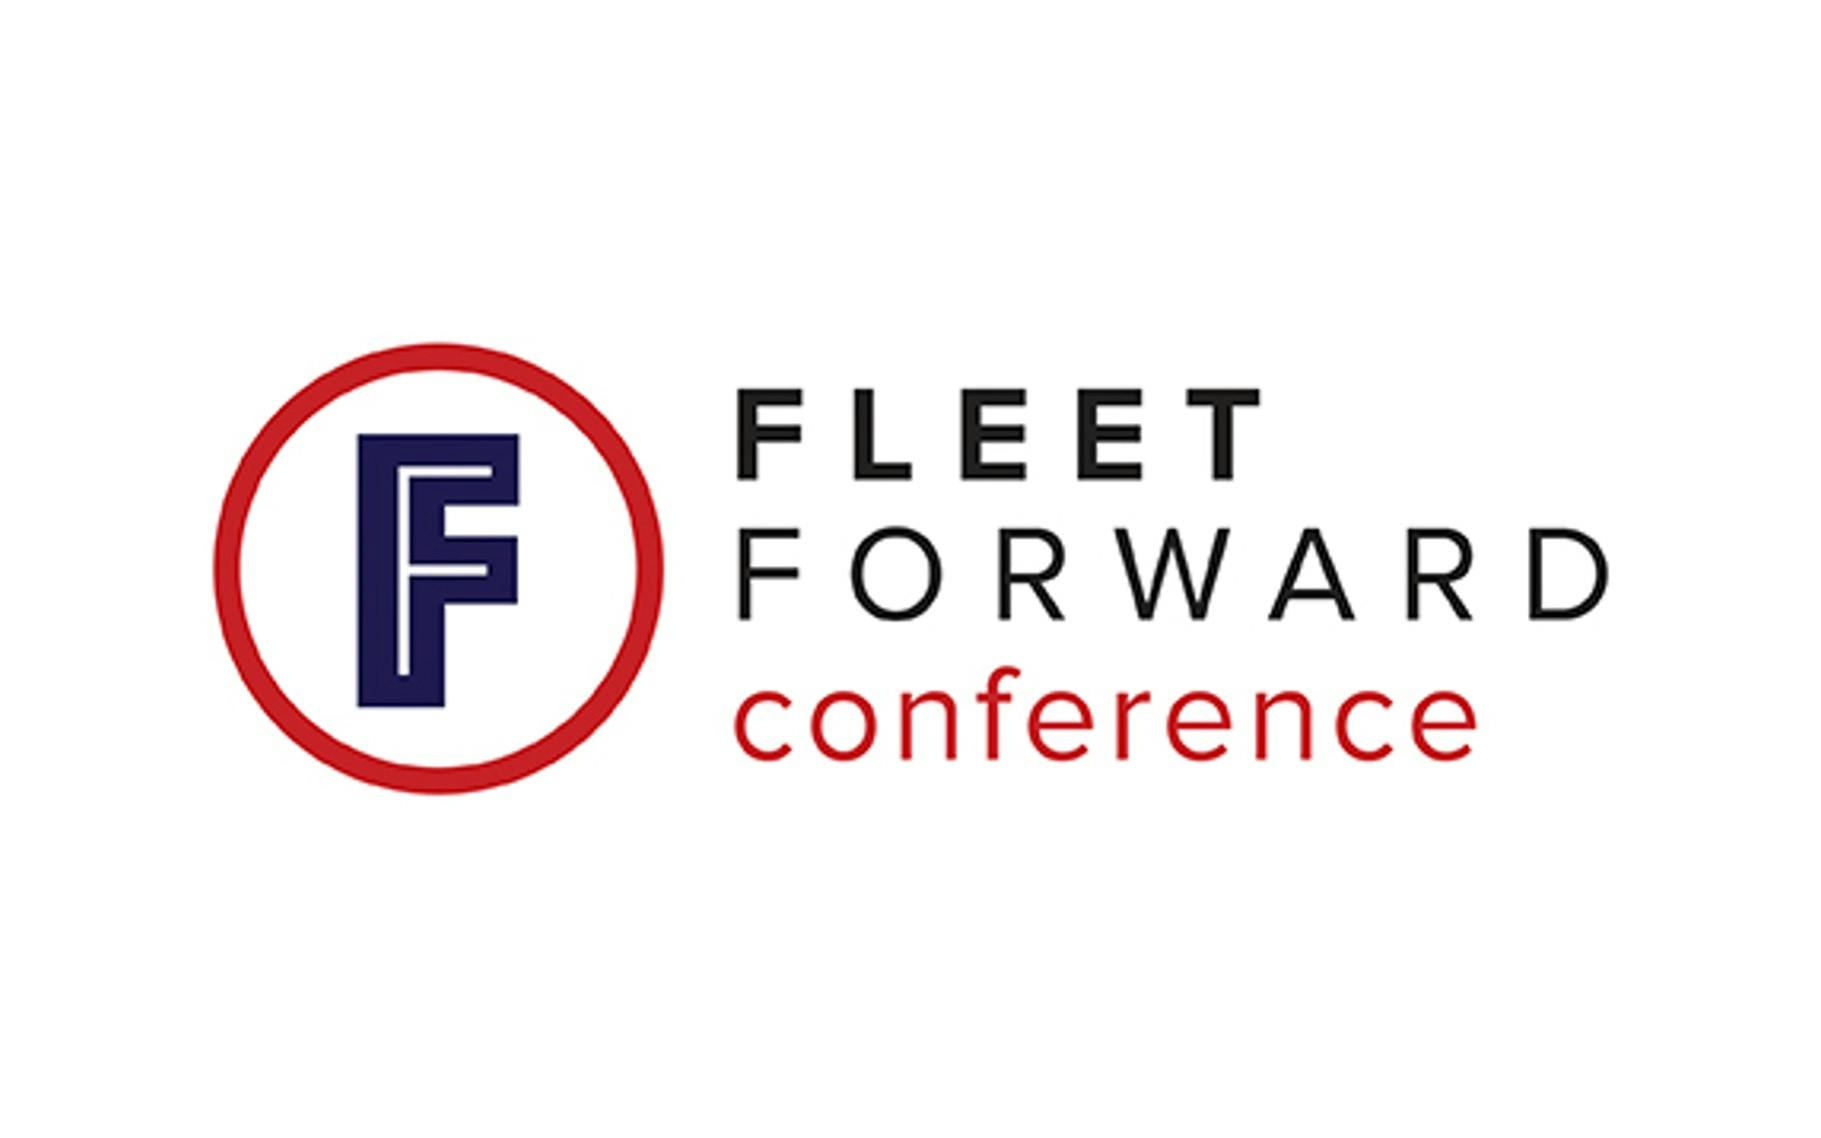 Fleet Forward Conference logo